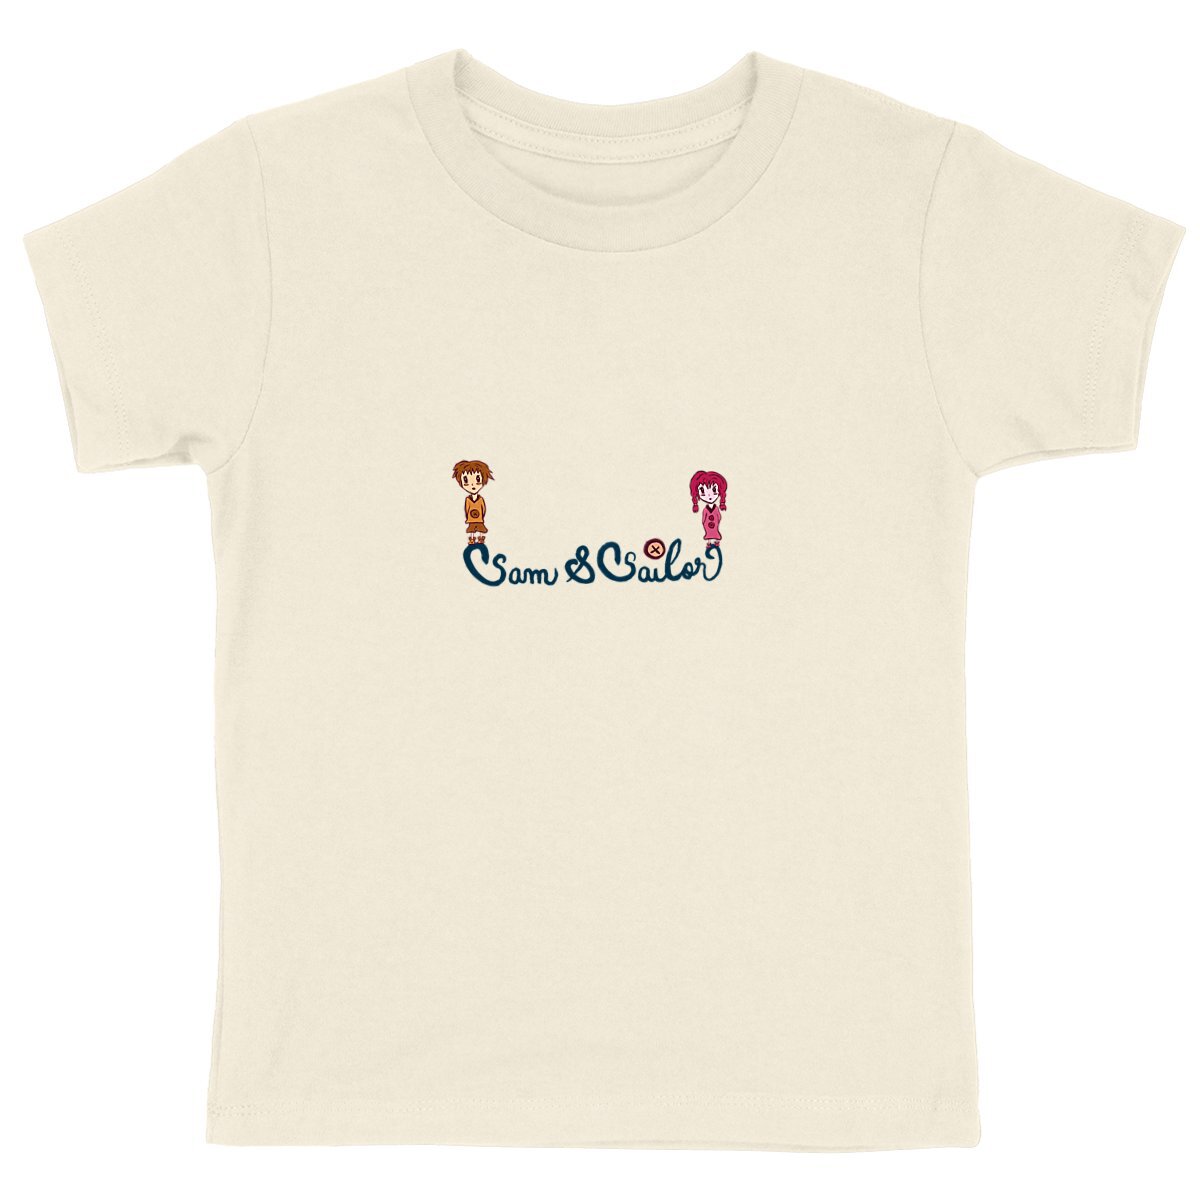 Tee-shirt enfant "Sam & Sailor" ficelle - Coton Bio